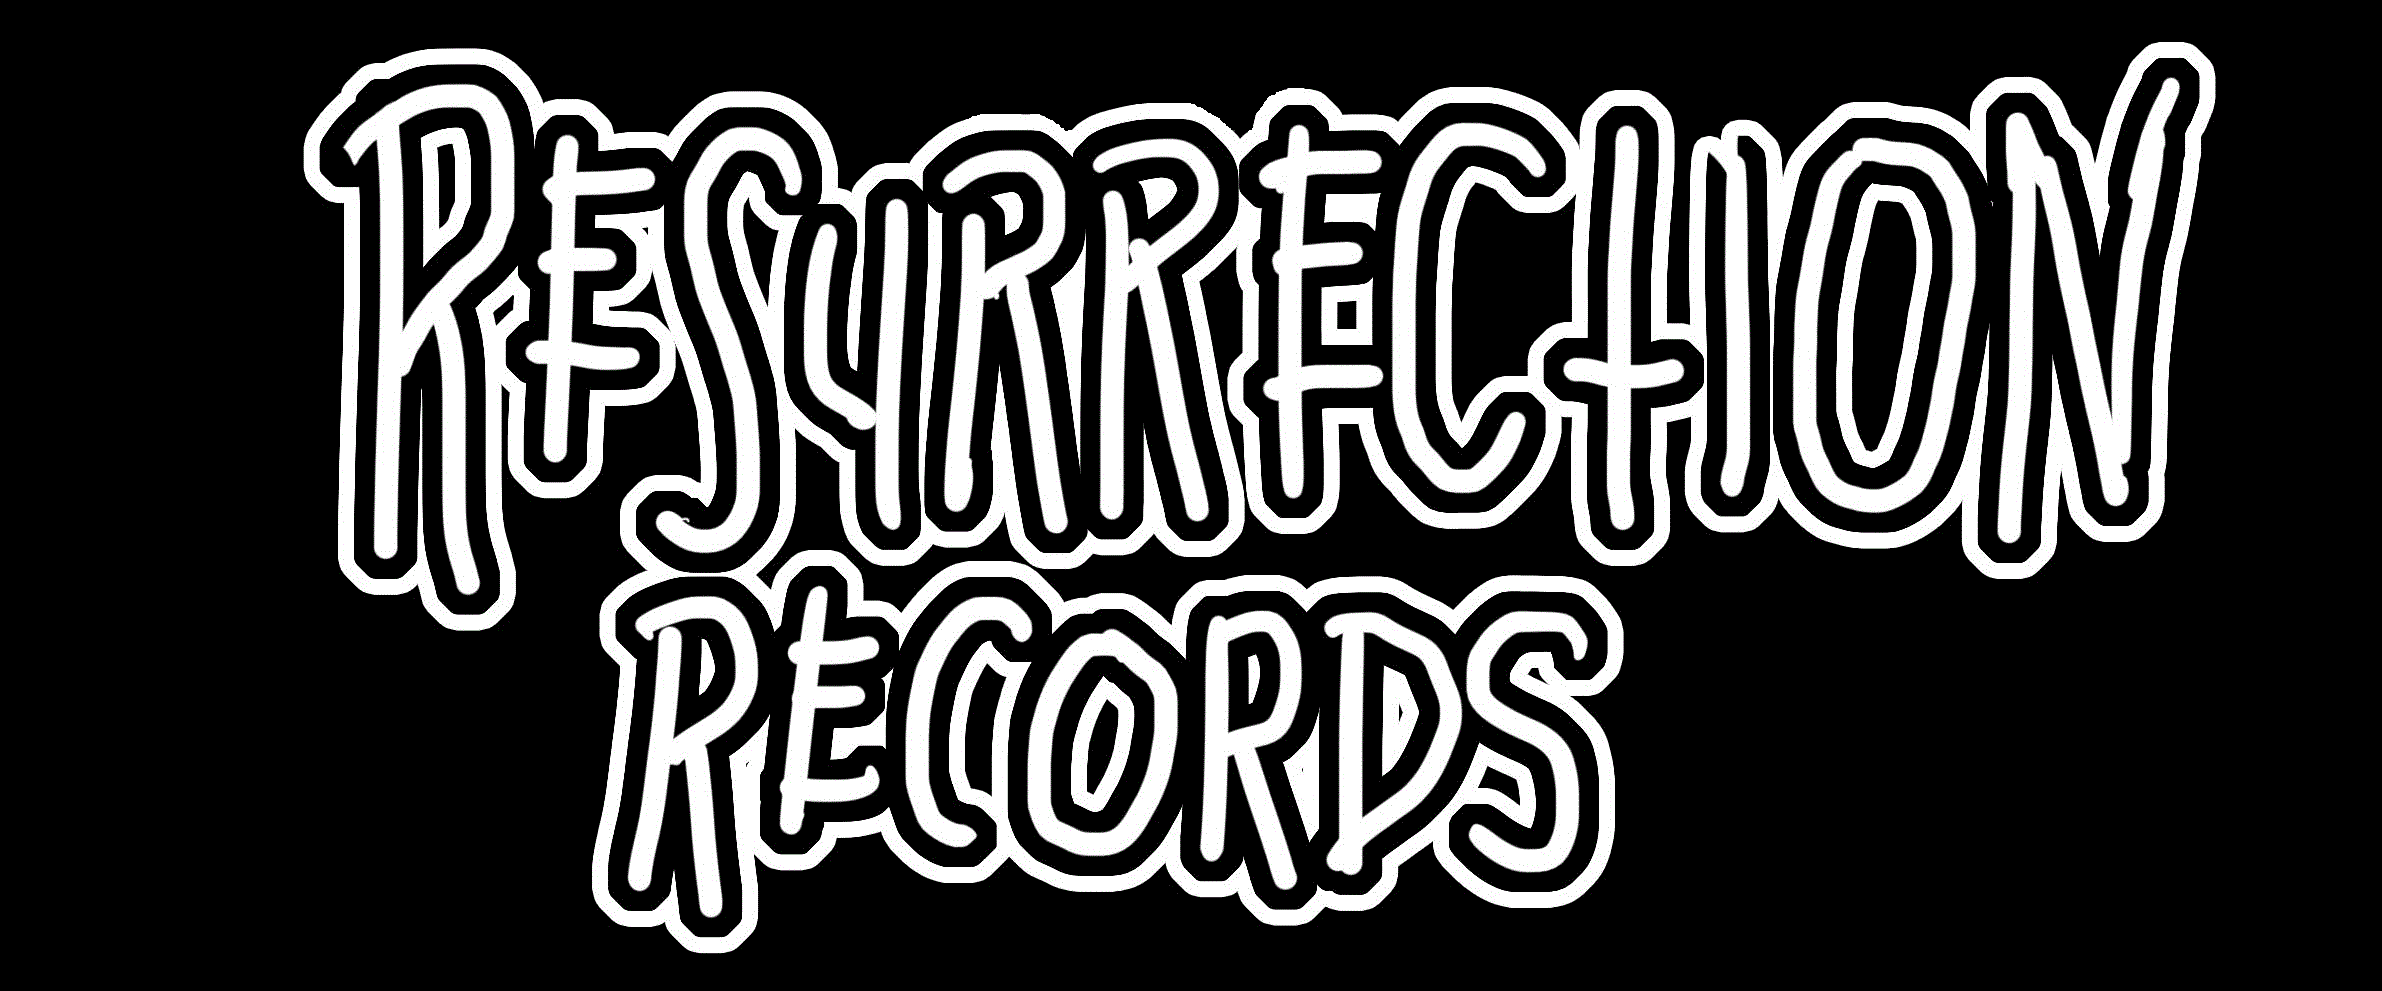 Resurrection Records 1" Button - "Inverted Resurrection" Logo